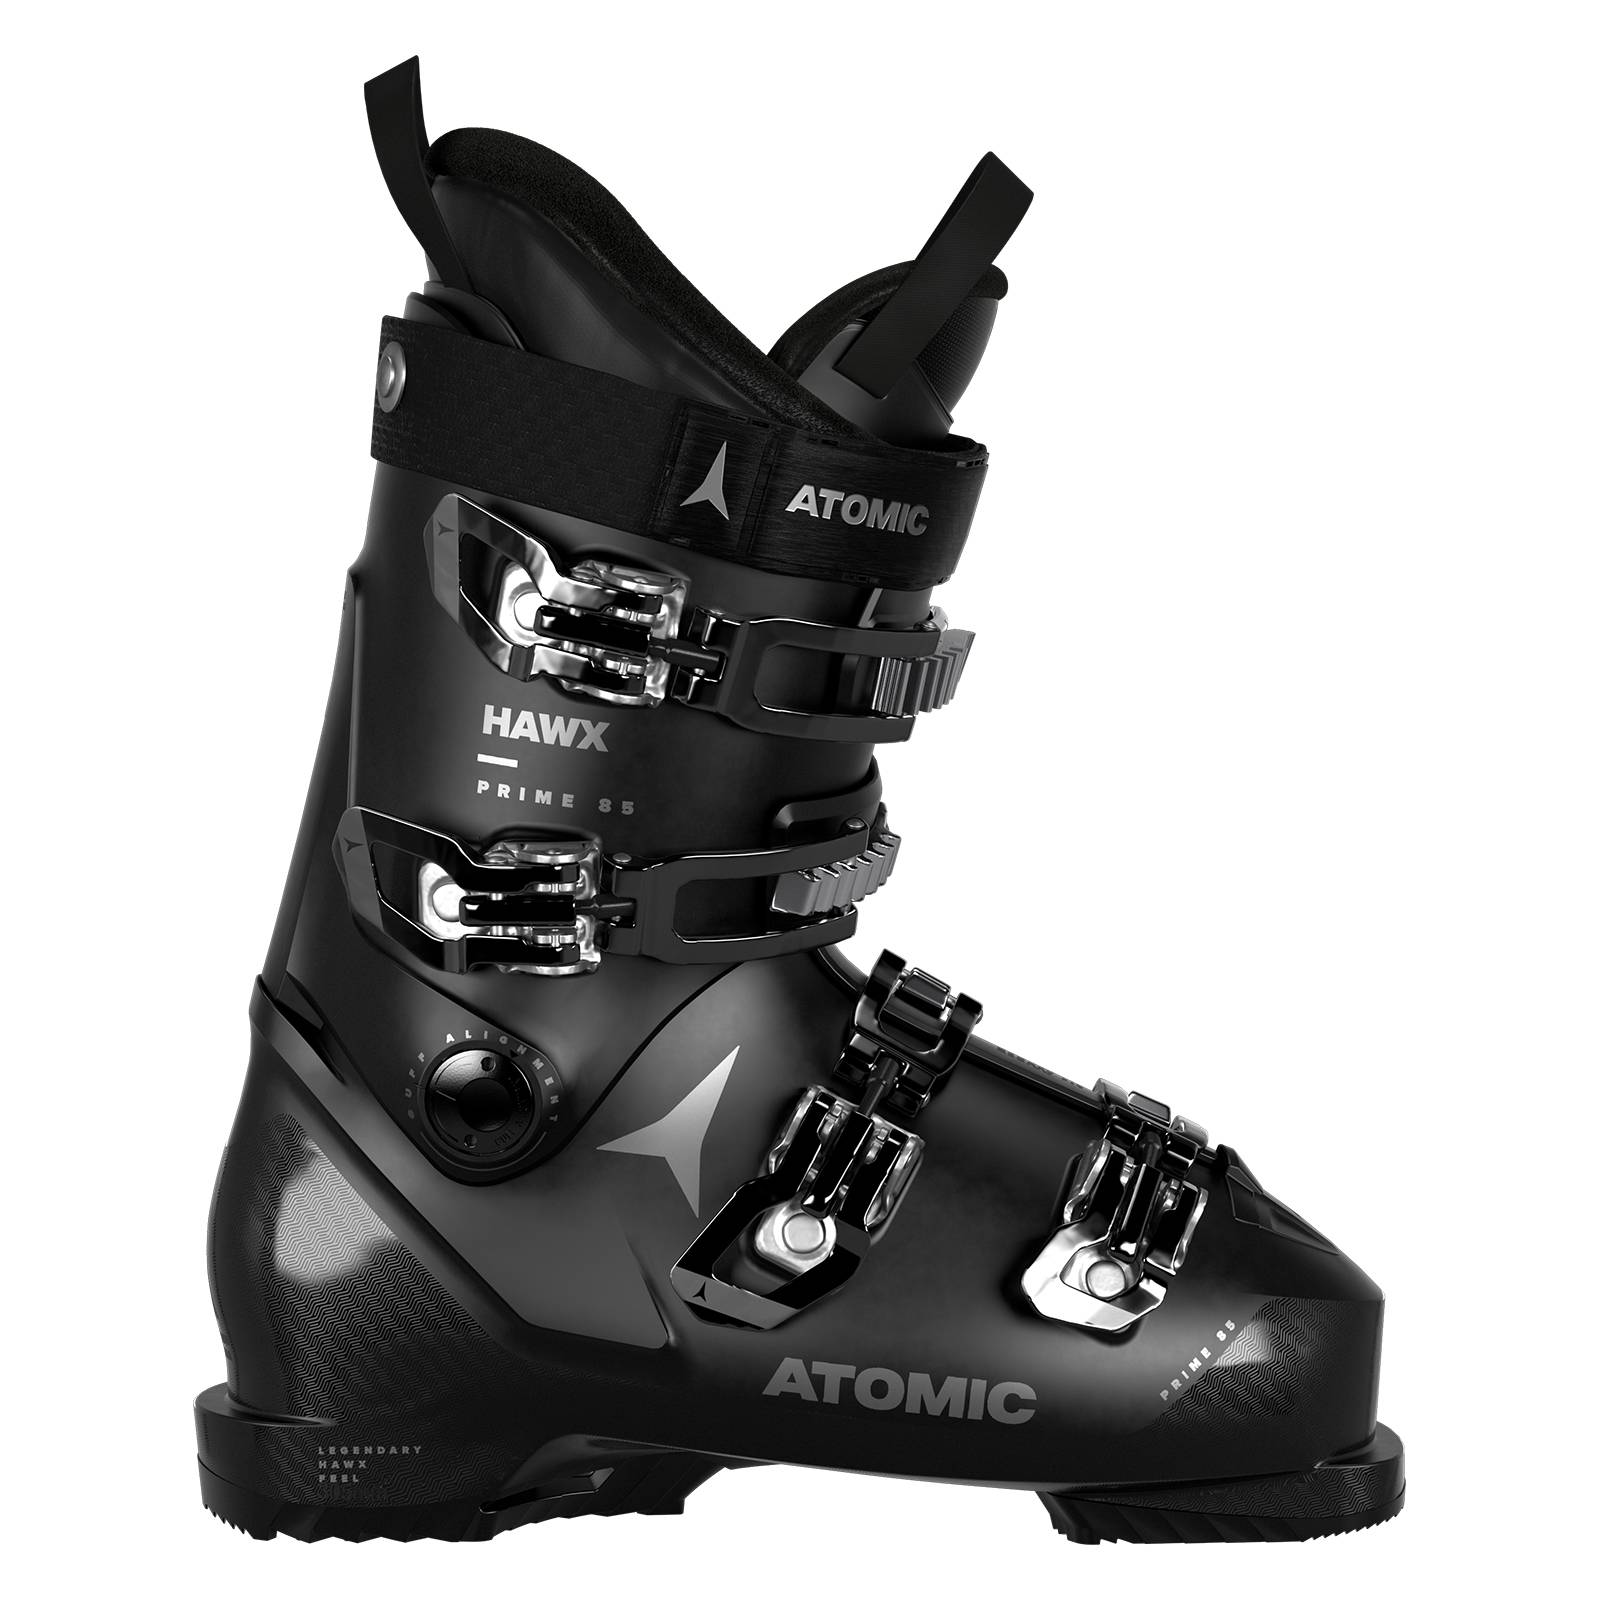 ATOMIC Hawx Prime 85 W Damen Skischuhe schwarz